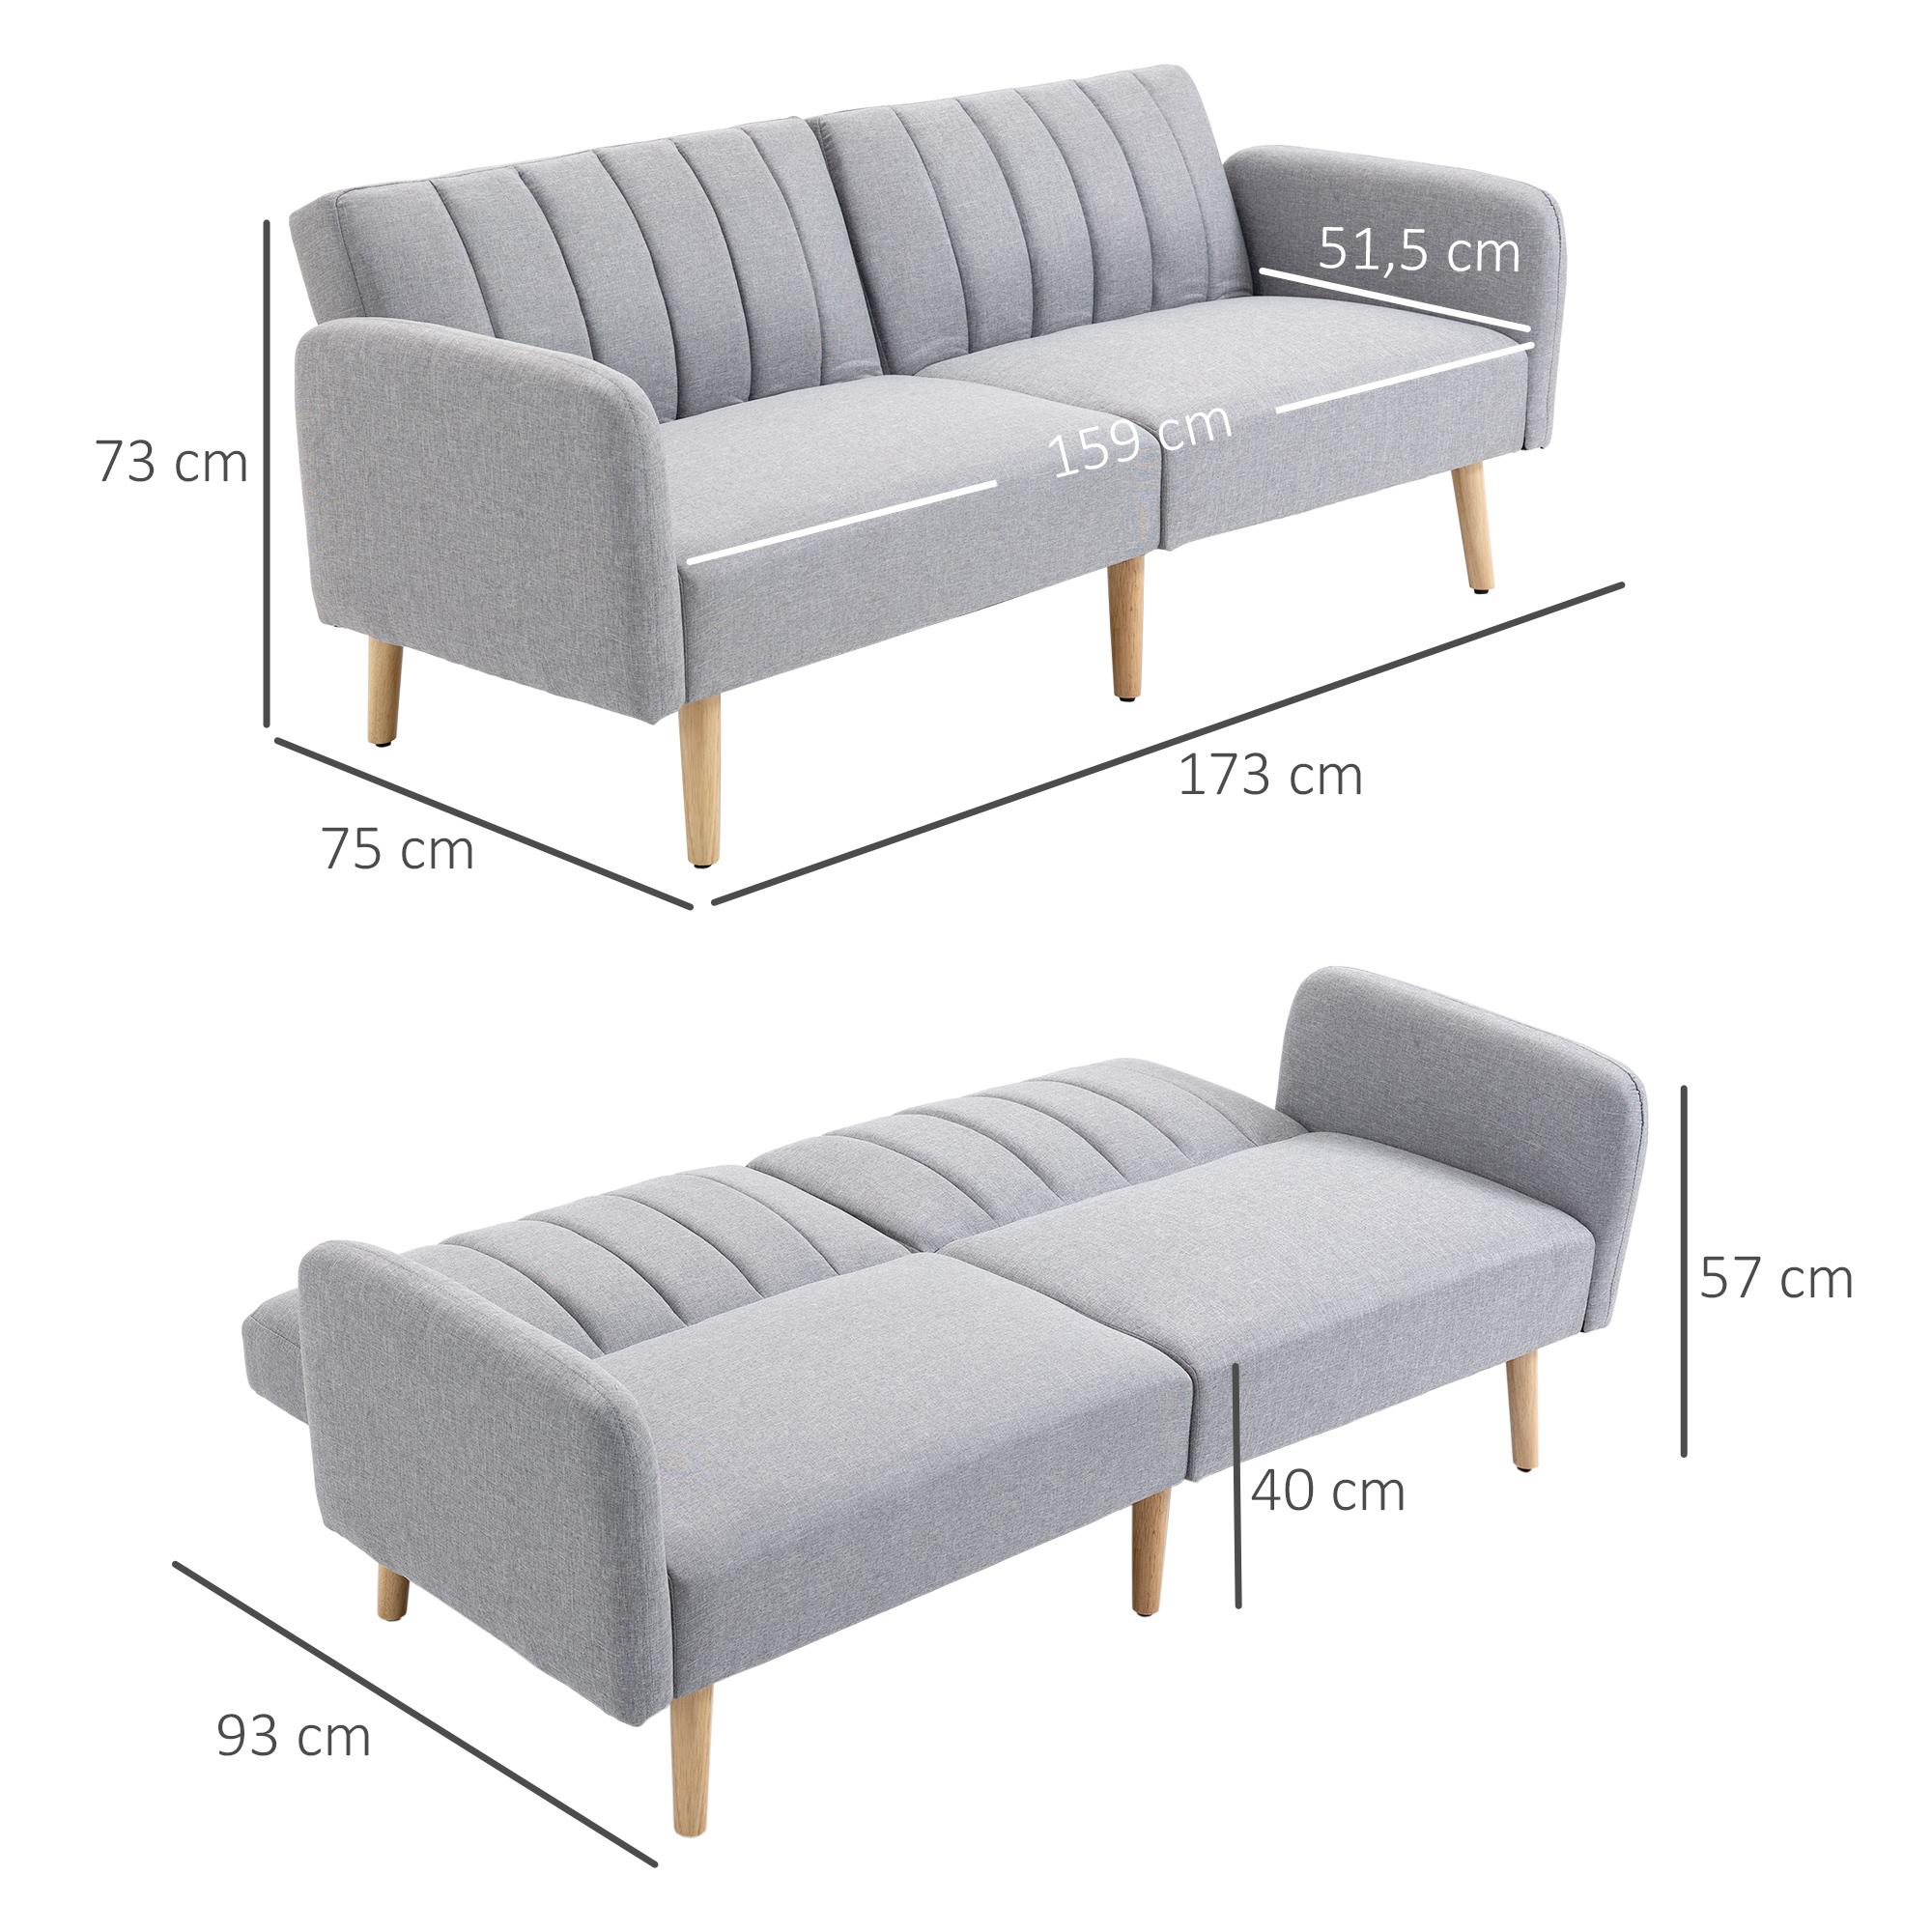 Canapé convertible 2 places design scandinave dossier inclinable 3 positions pieds bois tissu aspect lin gris